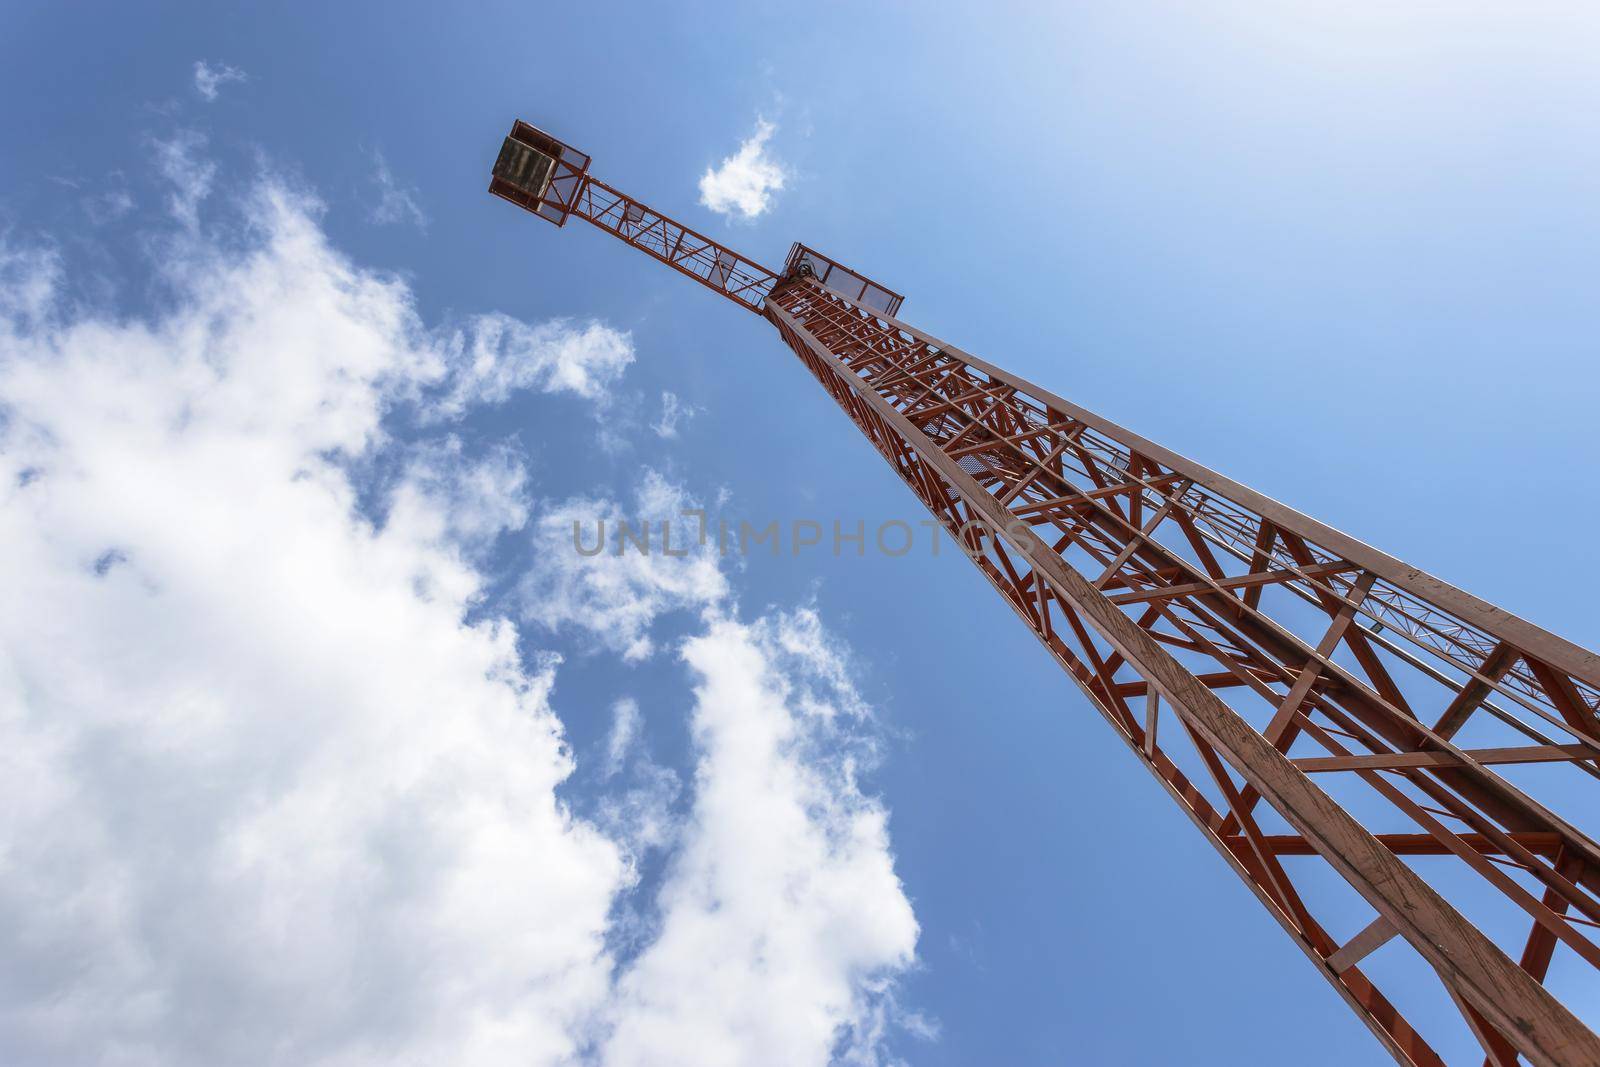 Construction crane by germanopoli